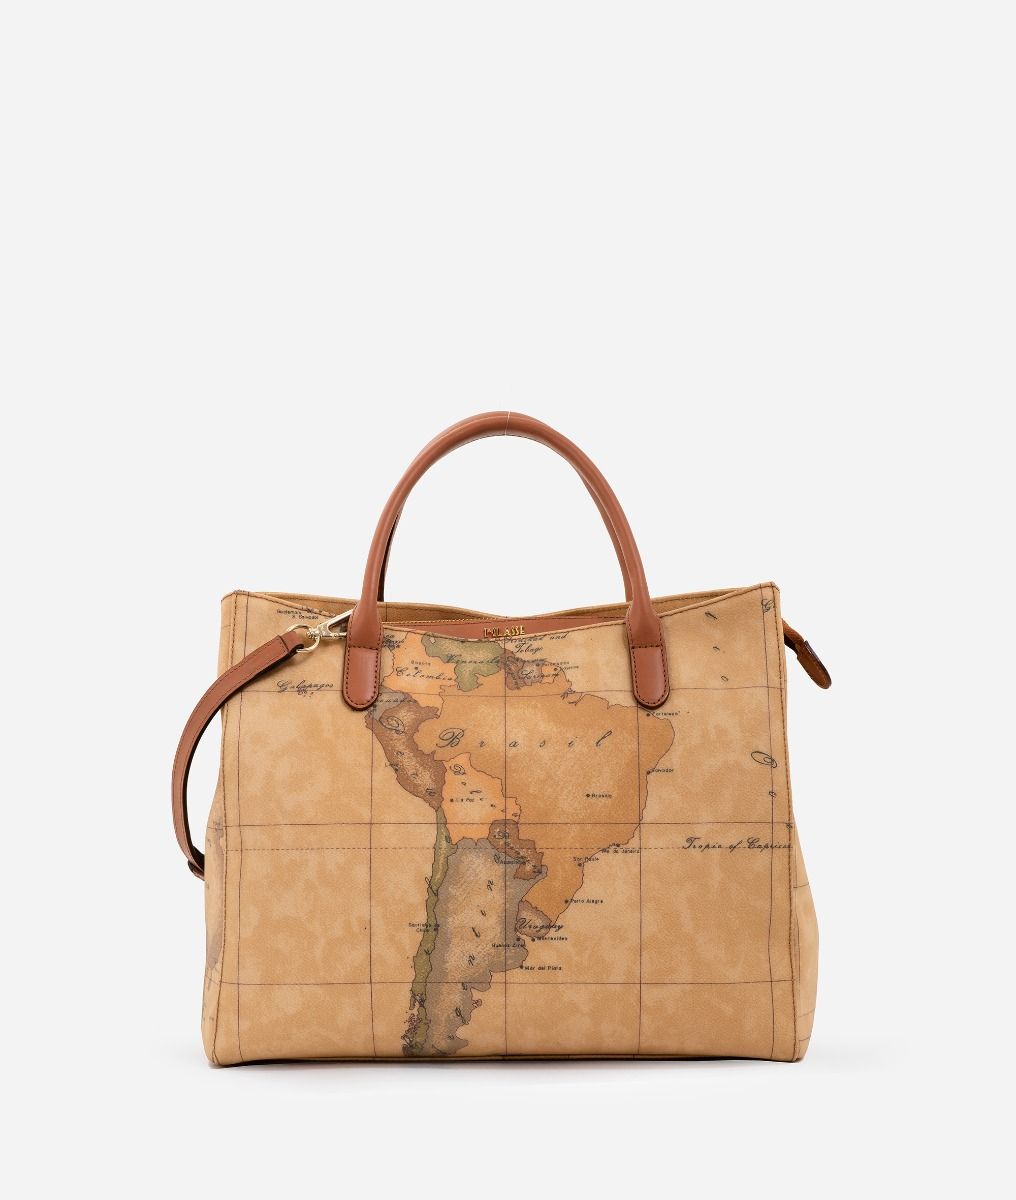 Geo Classic large handbag with shoulder strap,front